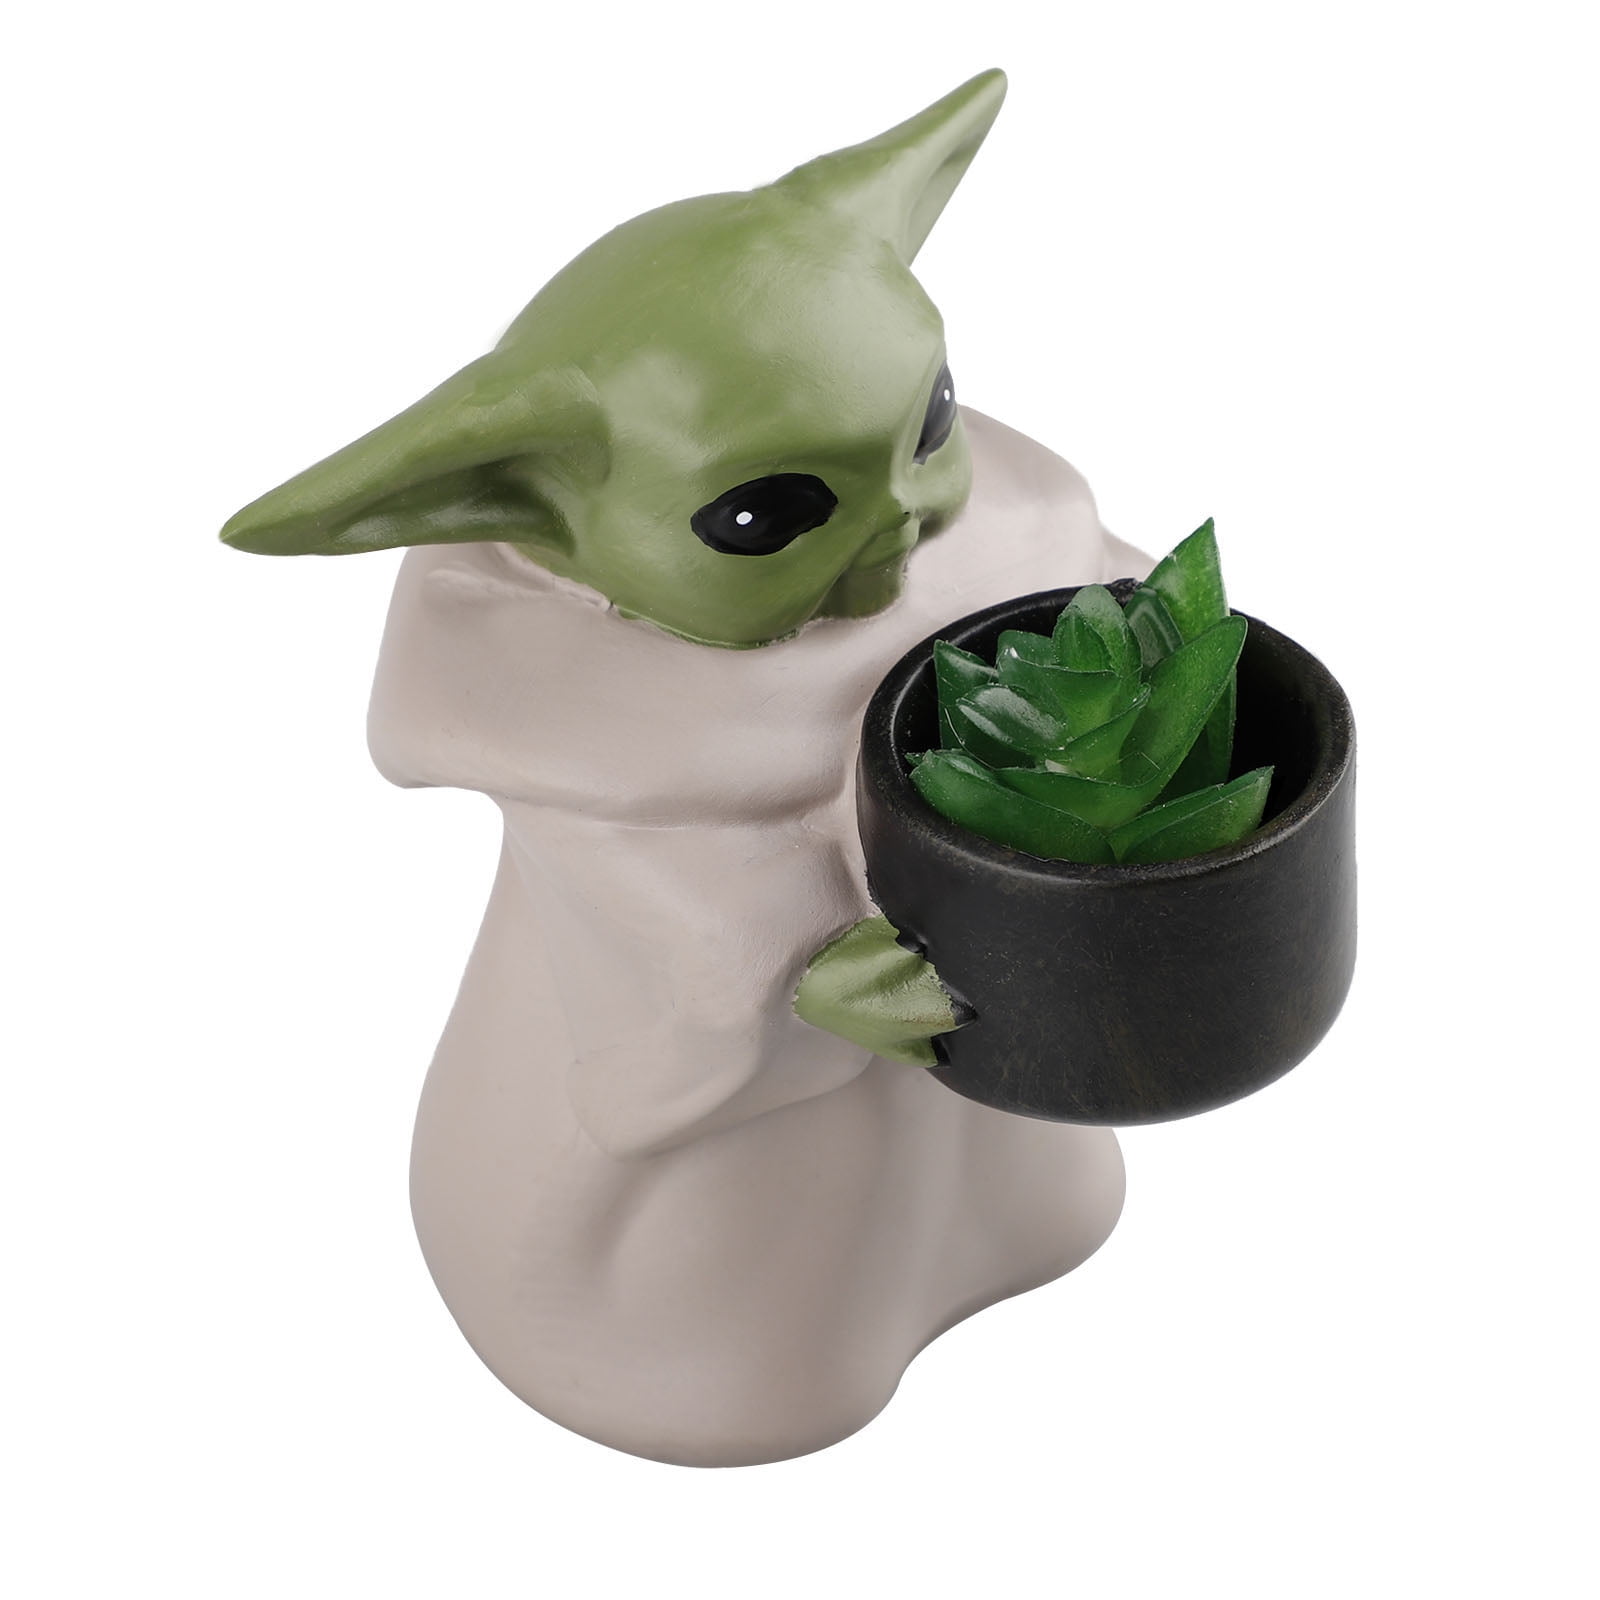 3D printed Mandalorian flower pot!